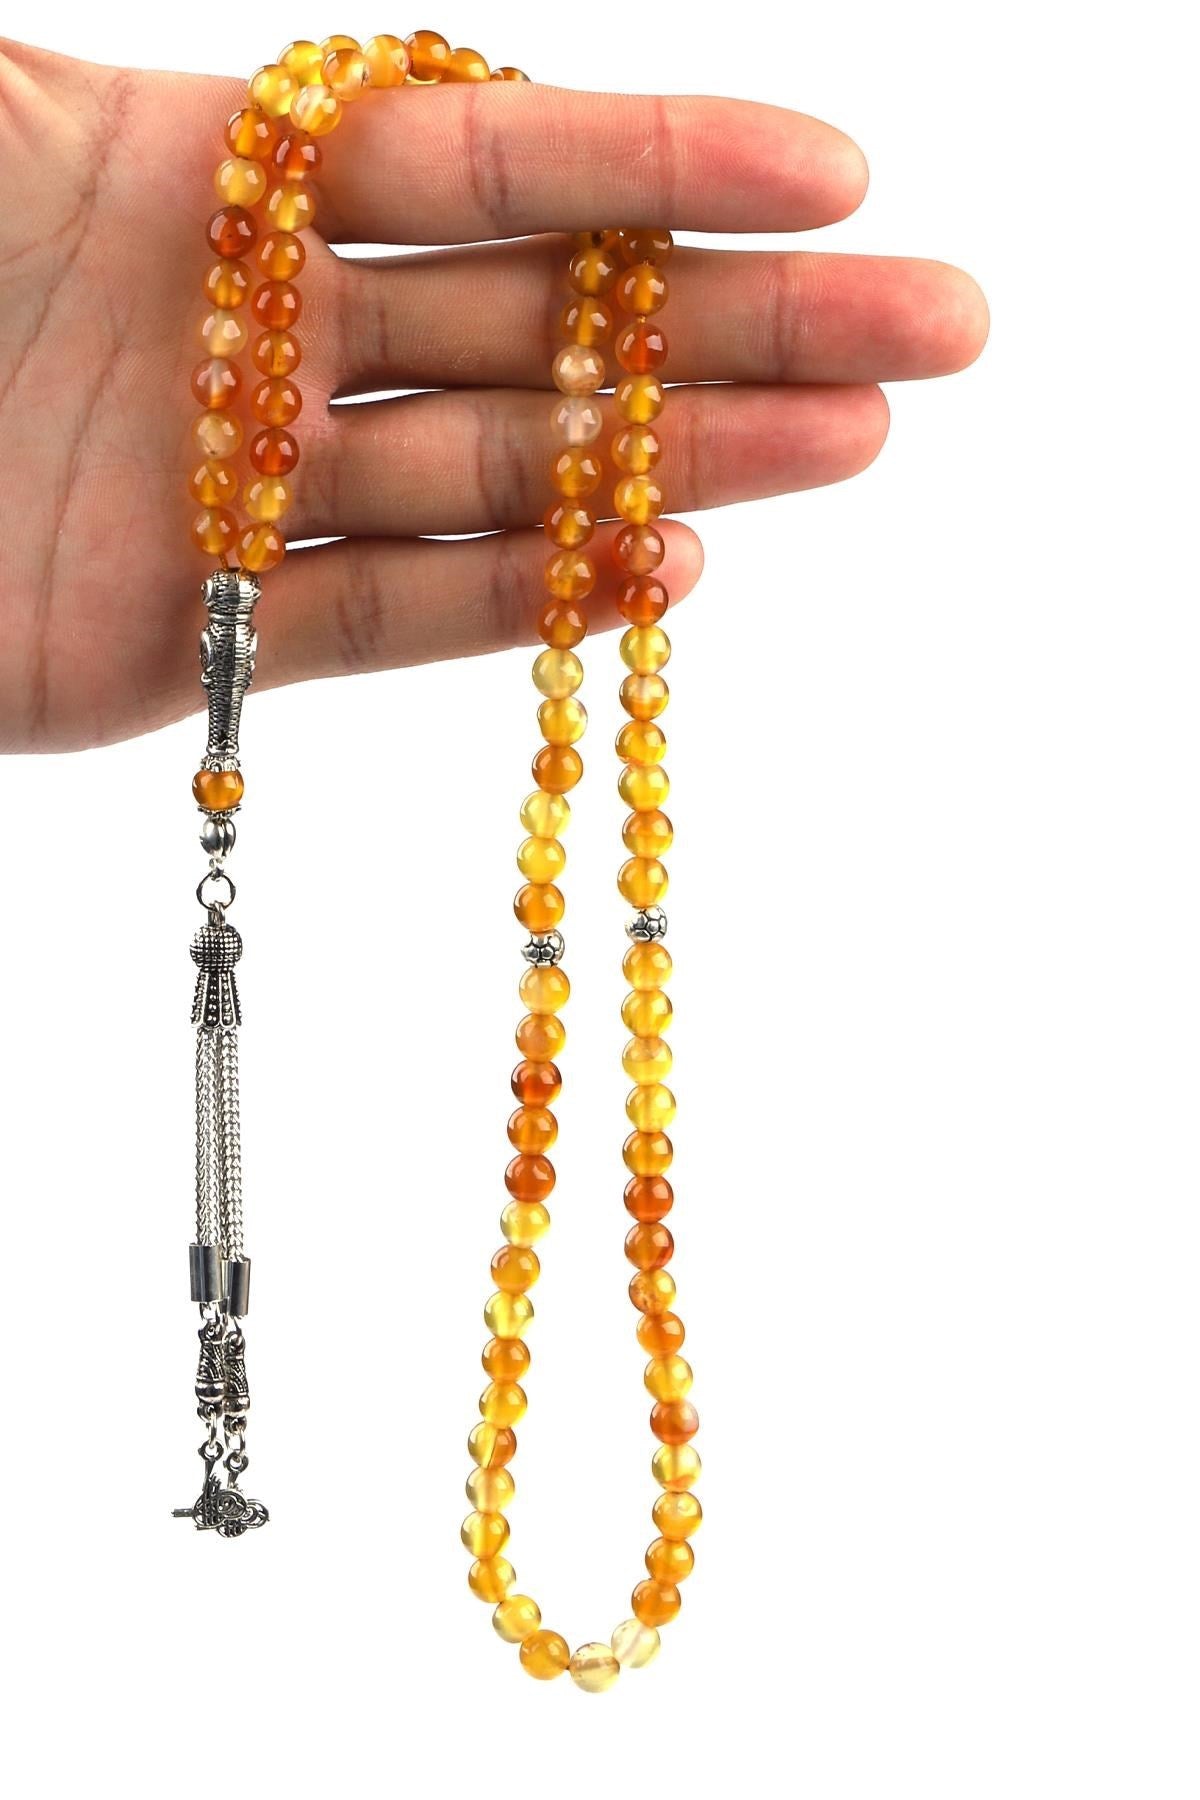 Agate Gemstone Prayer Beads - 6mm / 99pc